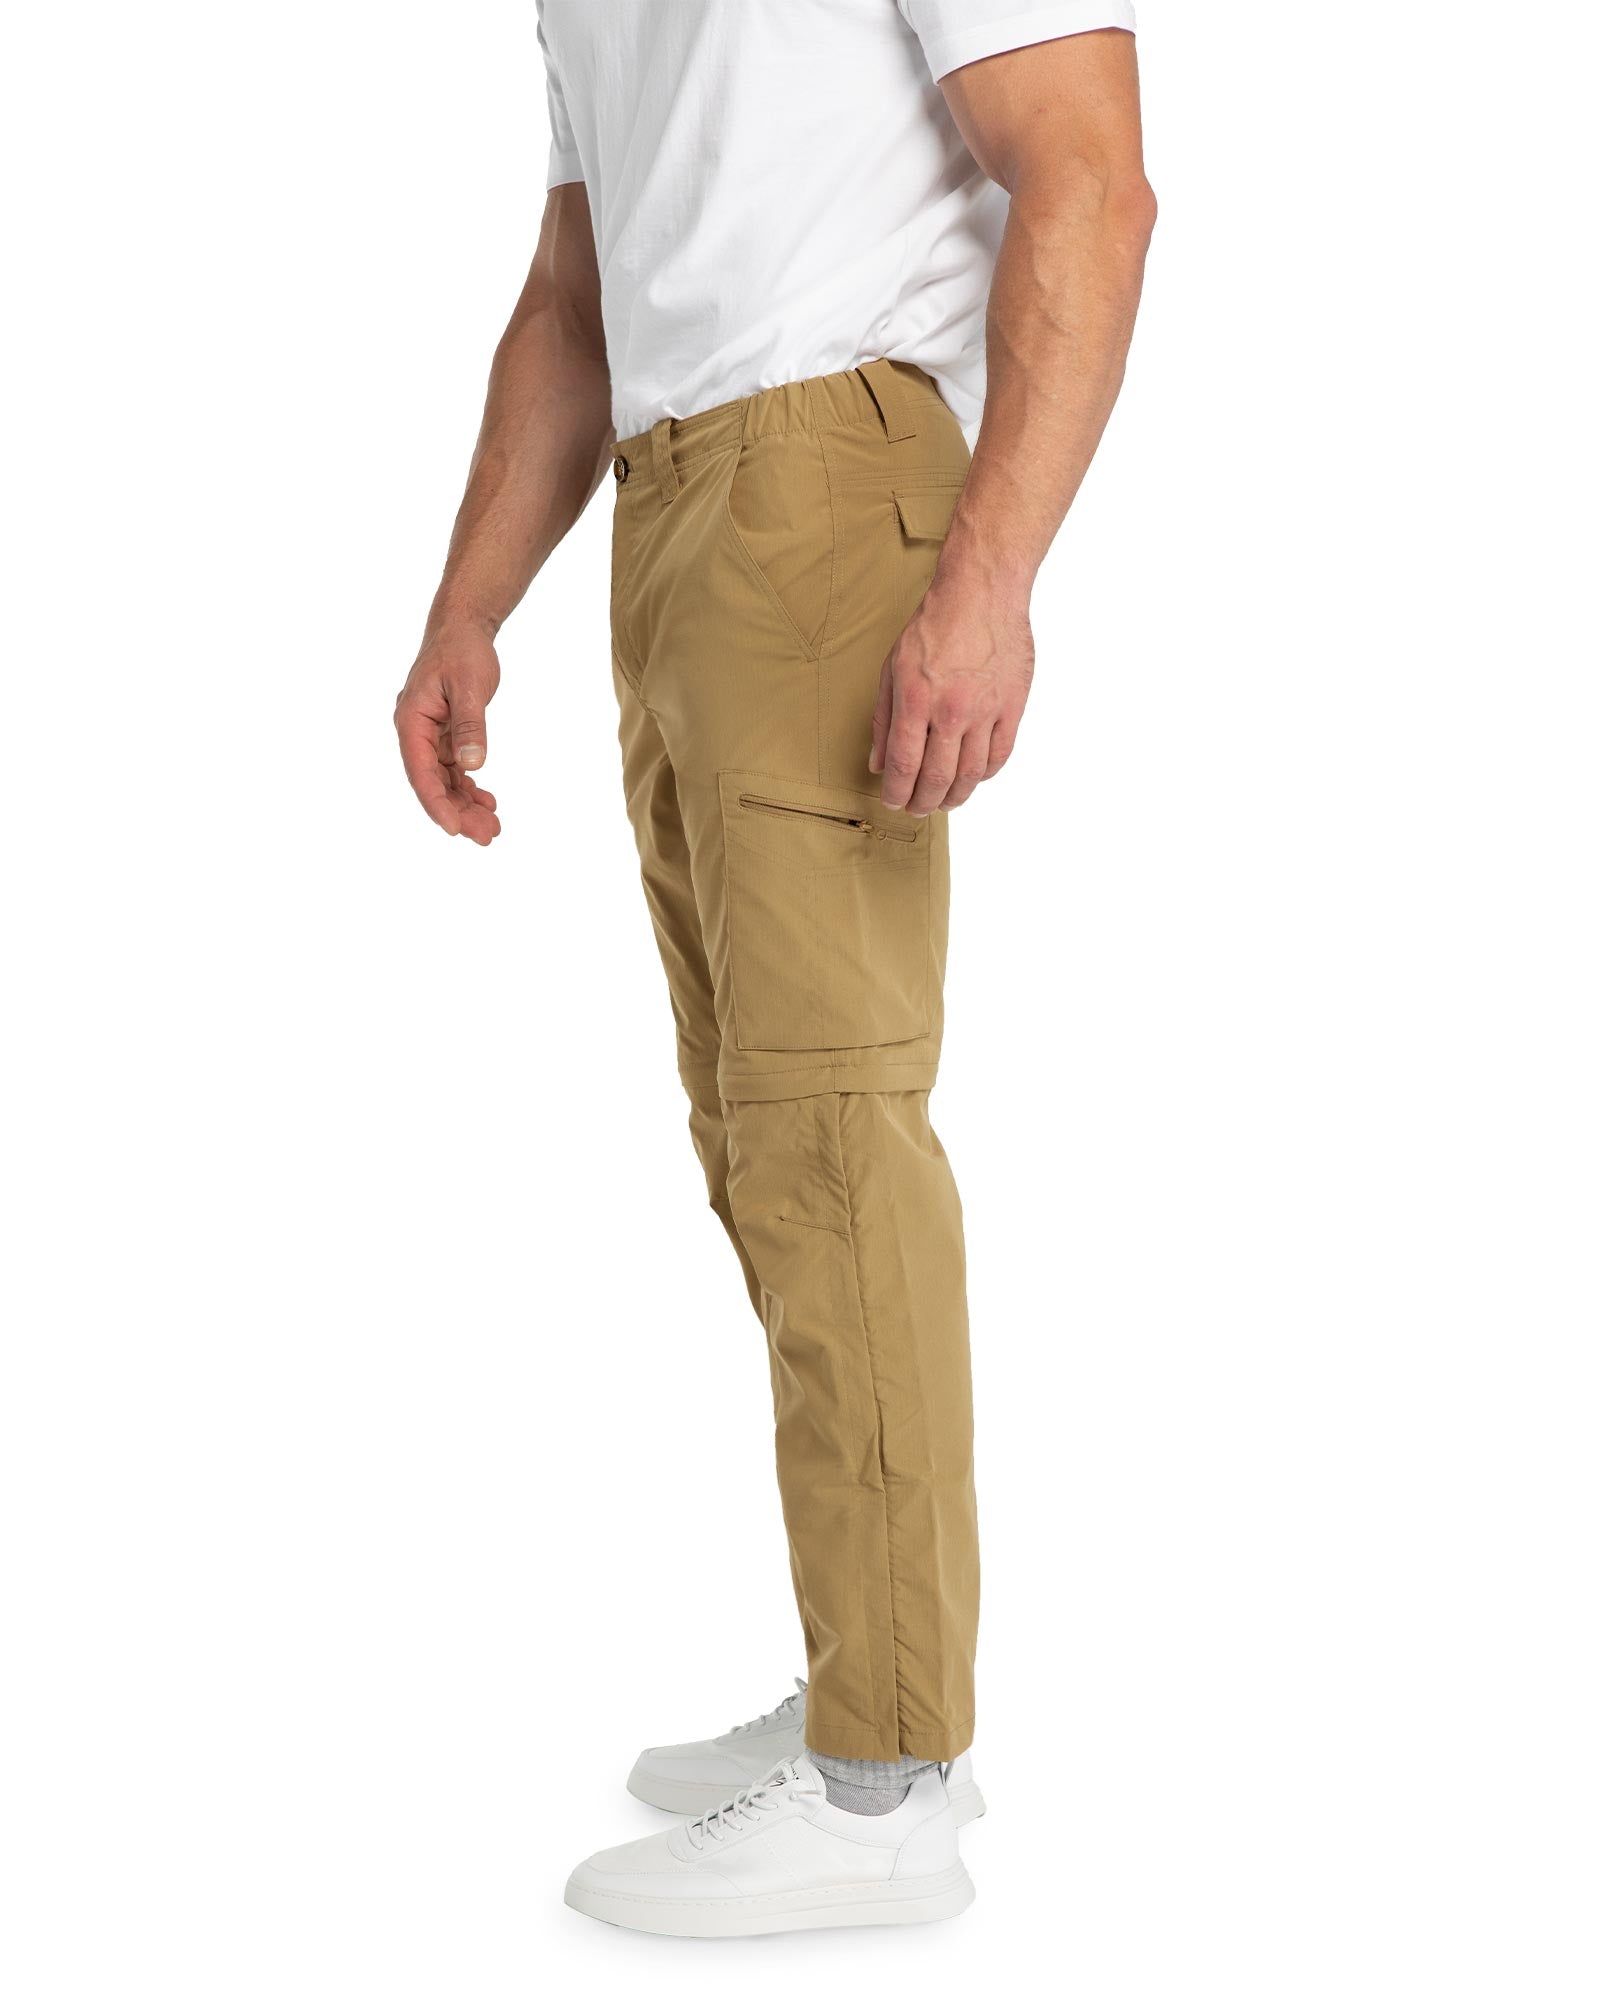 Men's Convertible Hiking Pants Zip Off Quick Dry Cargo Pants - Khaki / 30